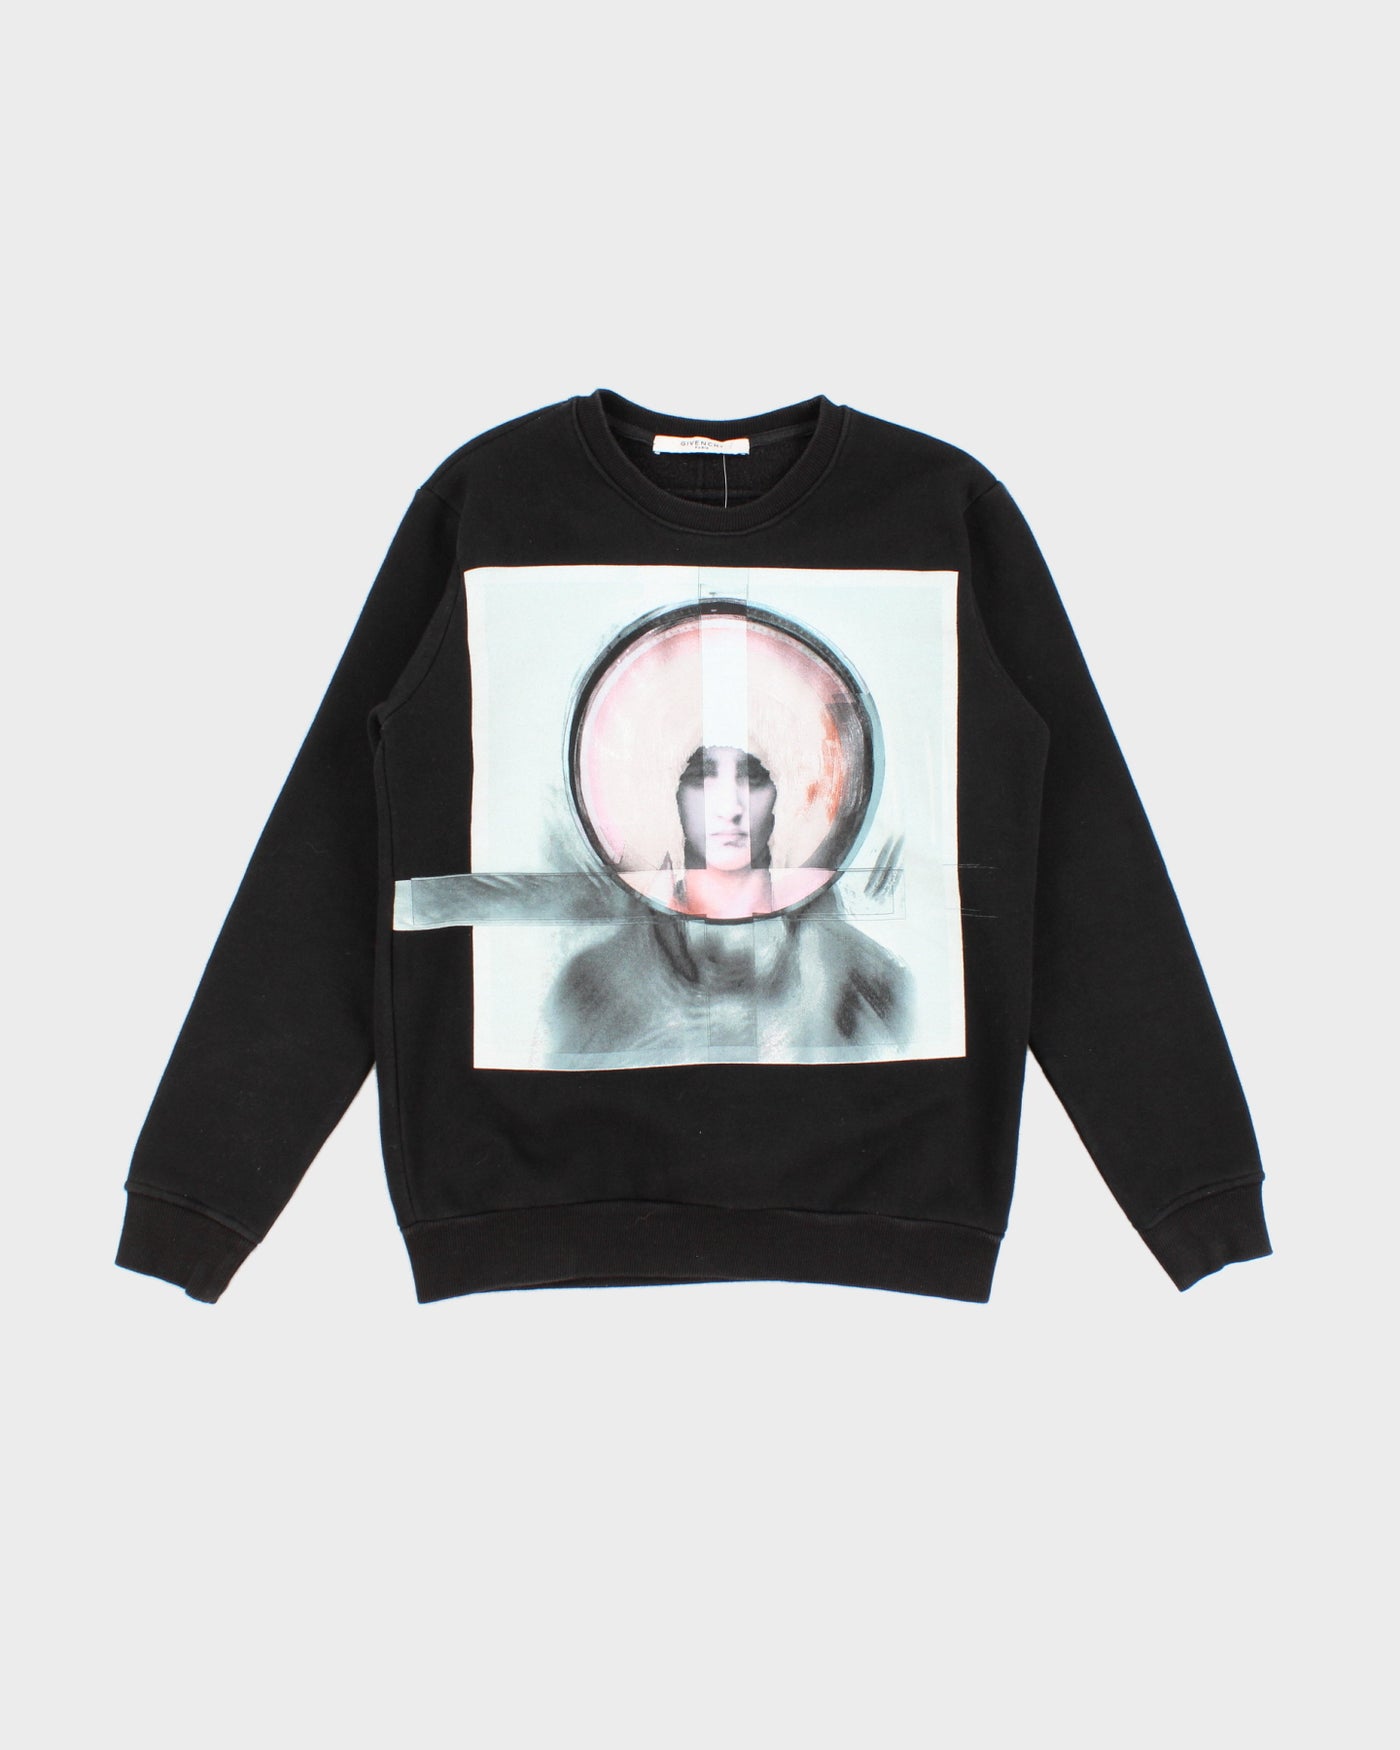 Givenchy Men's Black Printed Sweatshirt - S/M